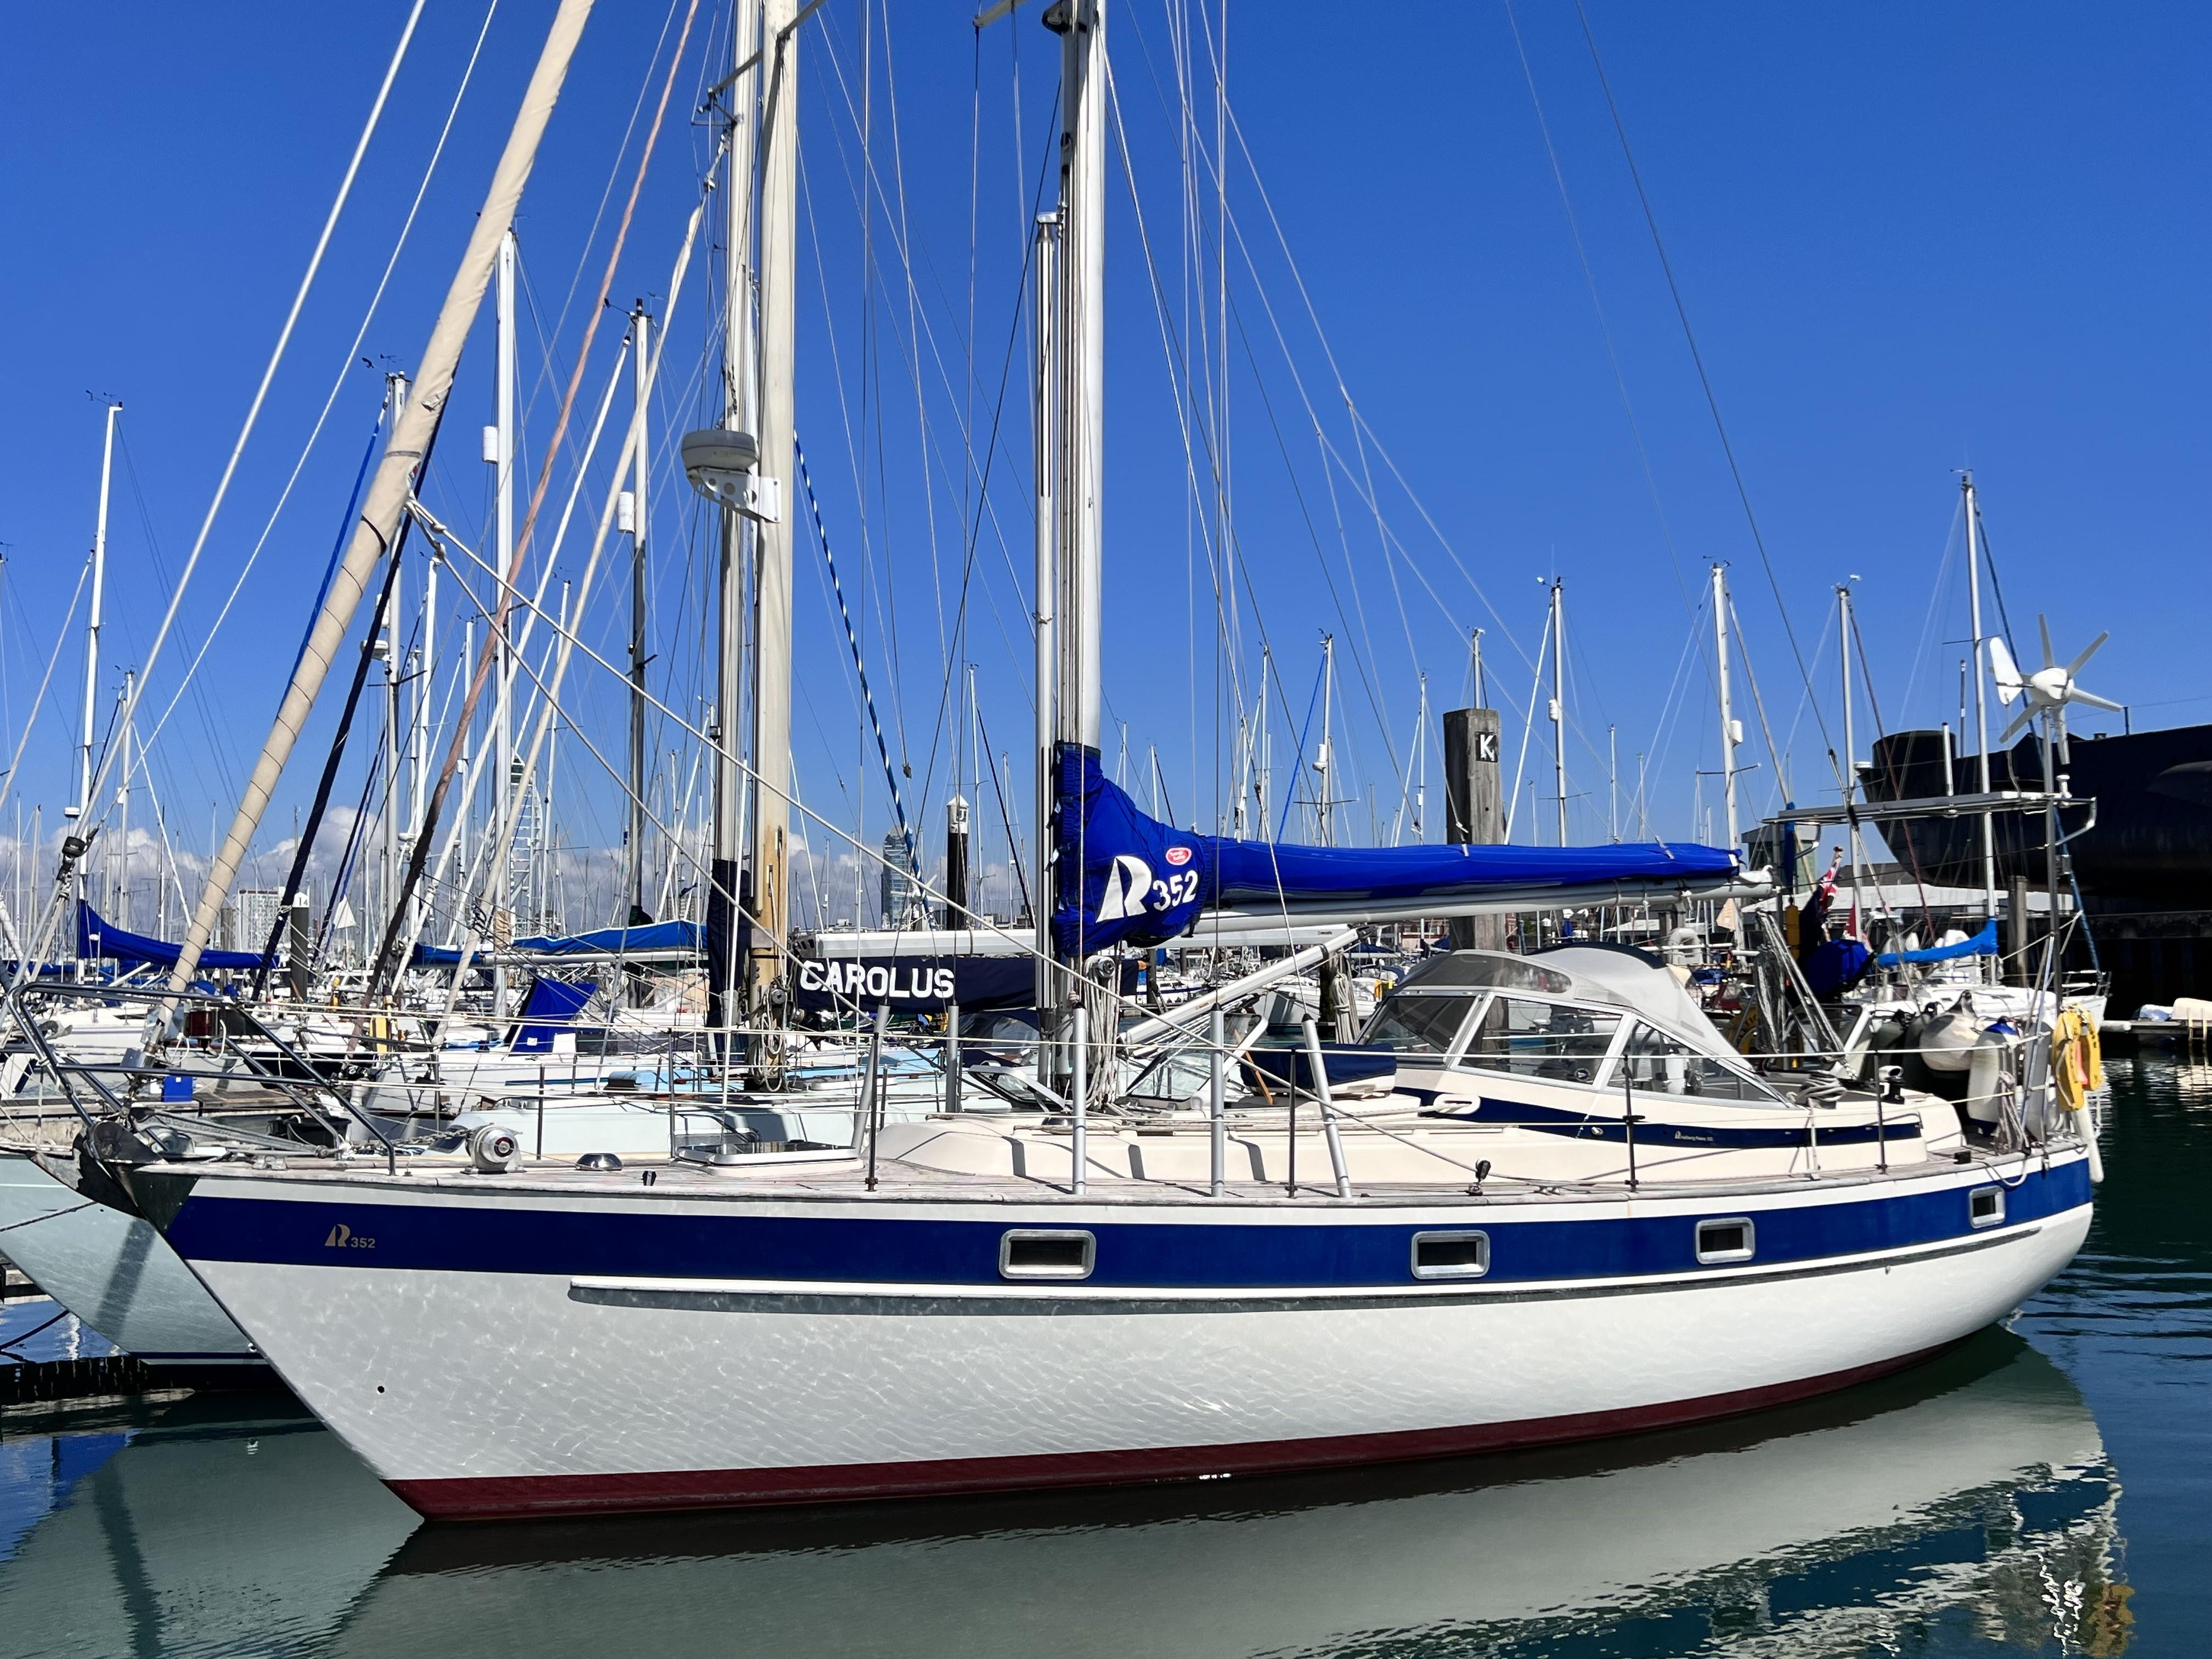 transworld yachts sailing ltd hamble point office